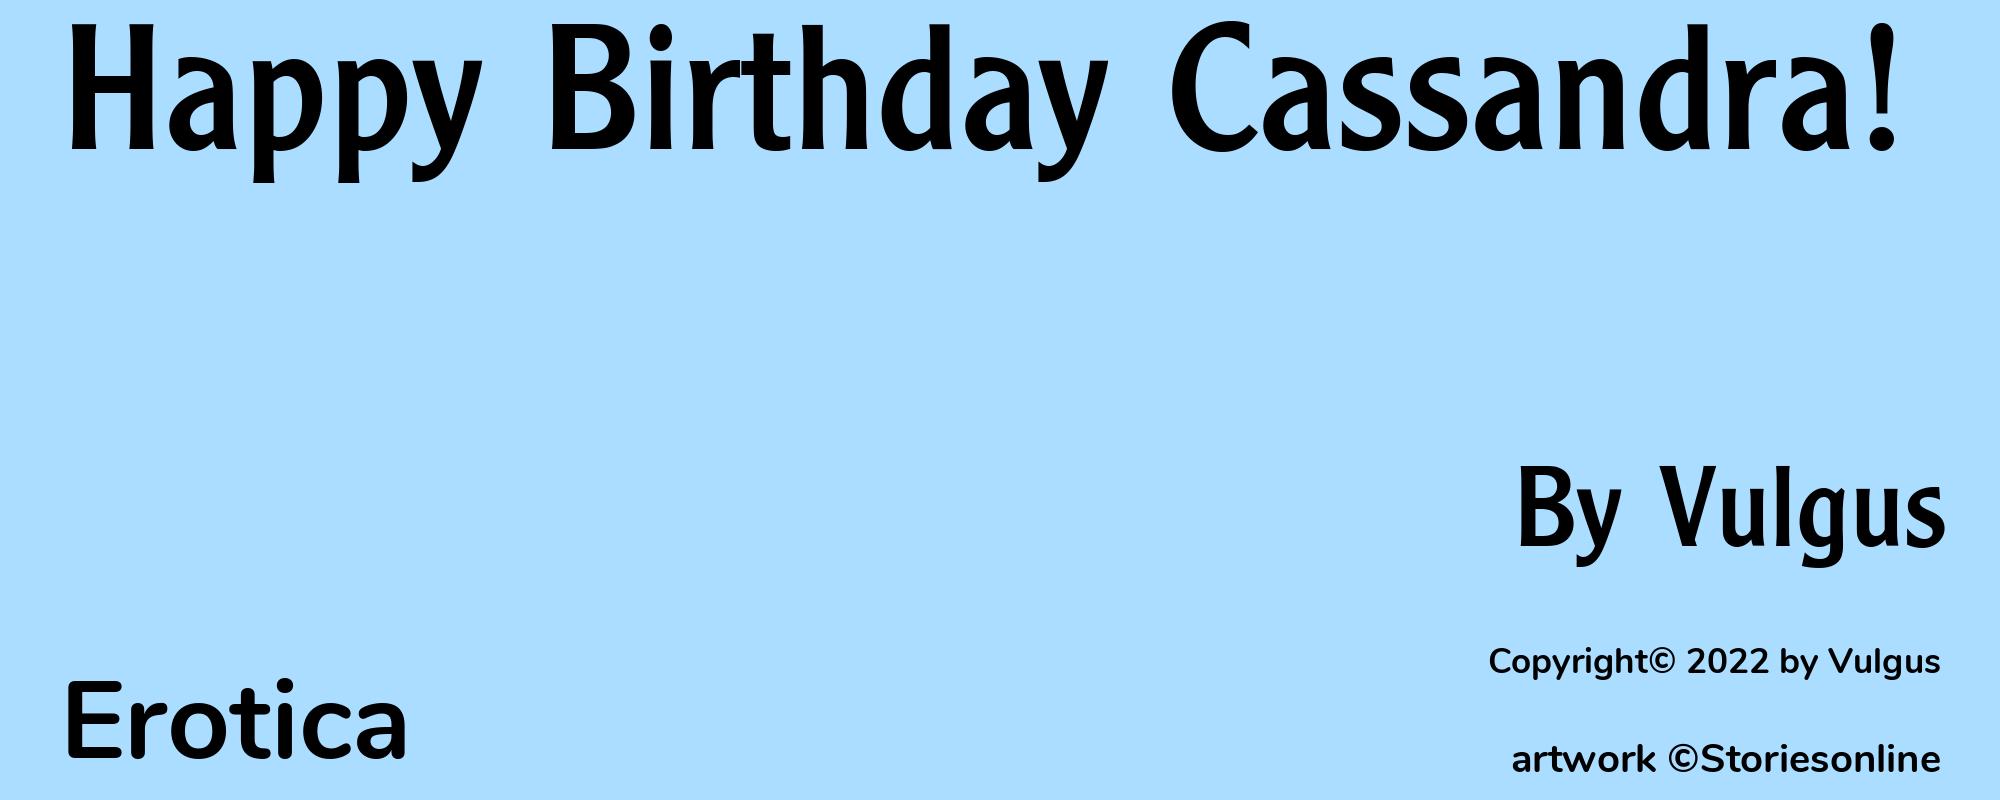 Happy Birthday Cassandra! - Cover